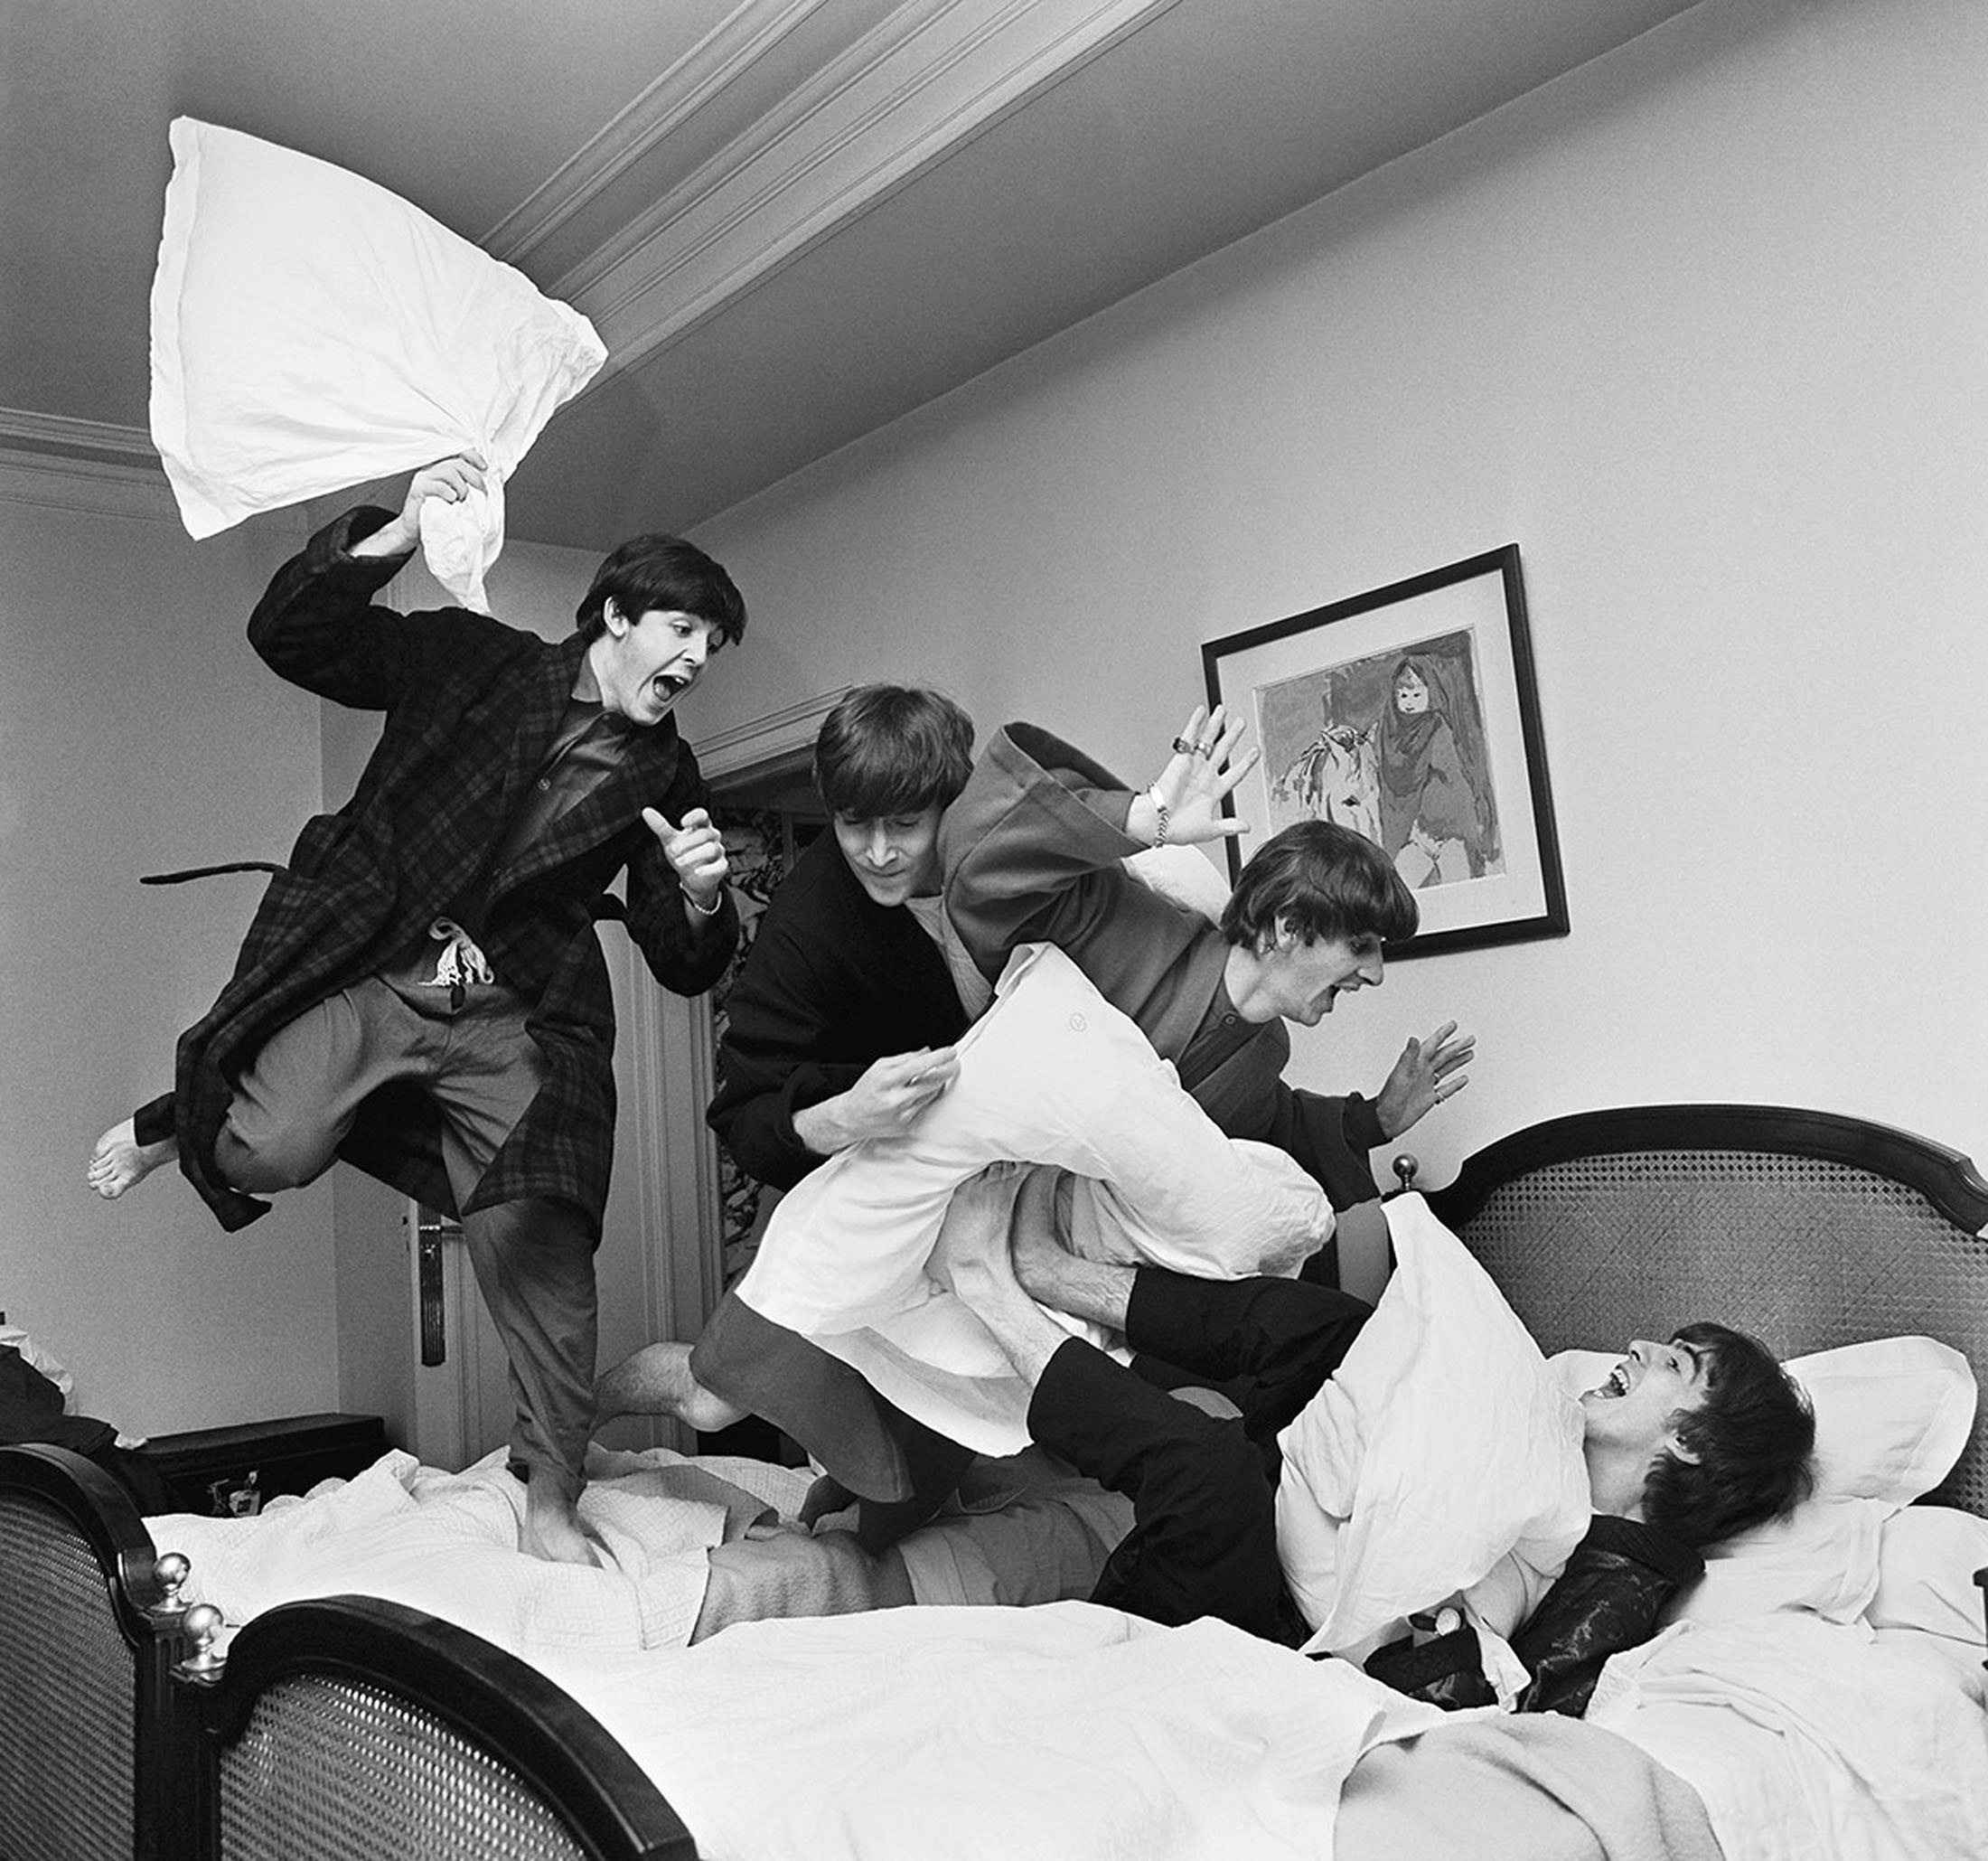 Harry Benson, The Beatles-Pillow Fight, 1964, Archival Fiber-Based Pigment Print112x112cm, Edition: 22/35, Courtesy: Harry BENSON